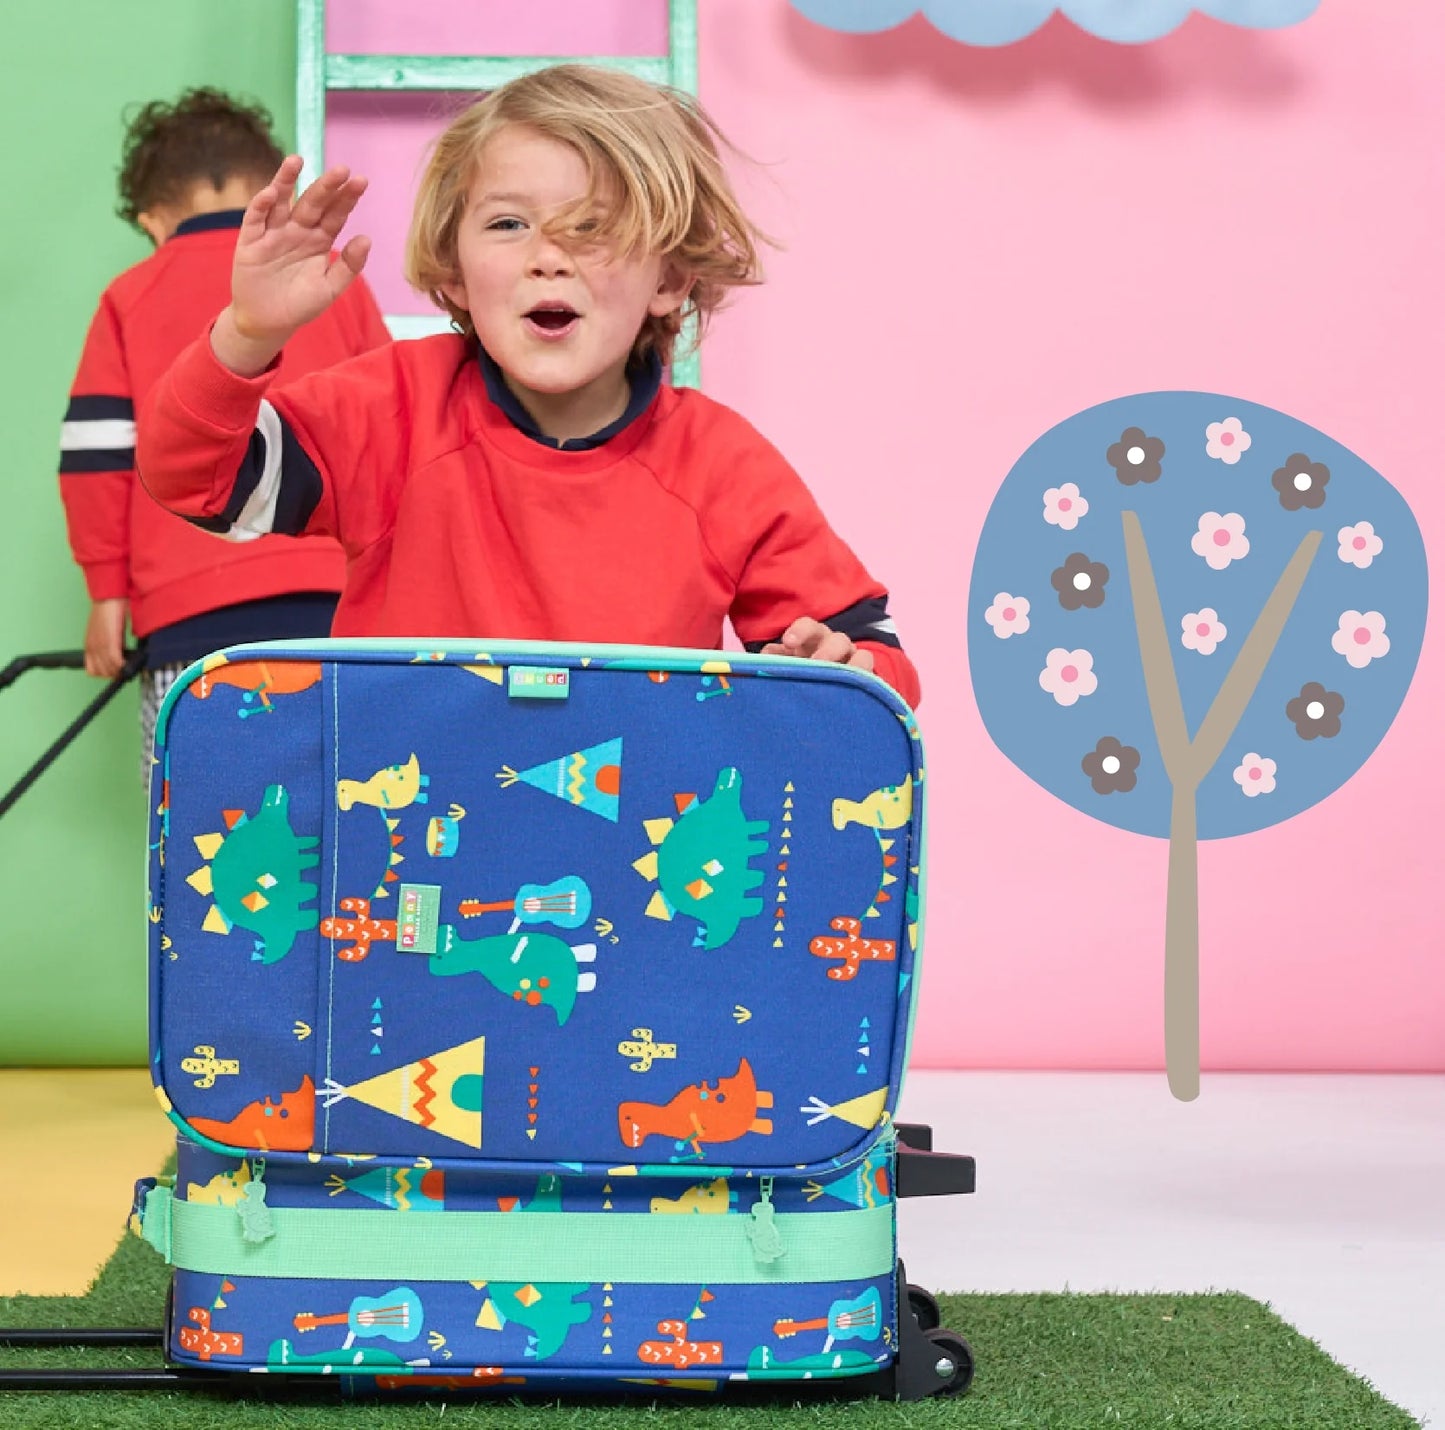 Penny Scallan Design Kids' 2 Wheel Suitcase - Dino Rock